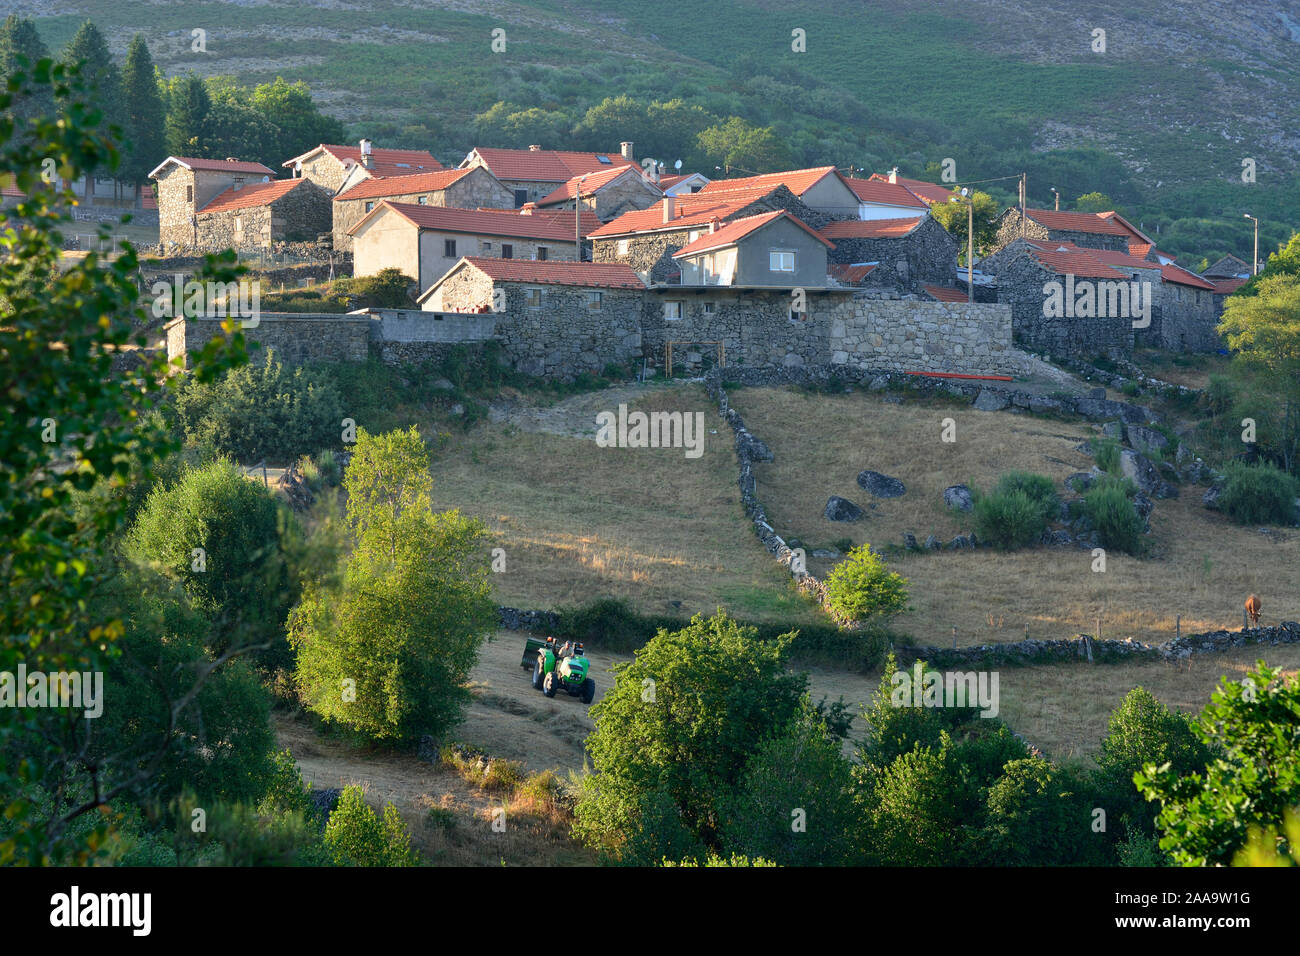 Das ländliche Dorf Branda Dos Homens. Nationalpark Peneda Geres, Portugal Stockfoto